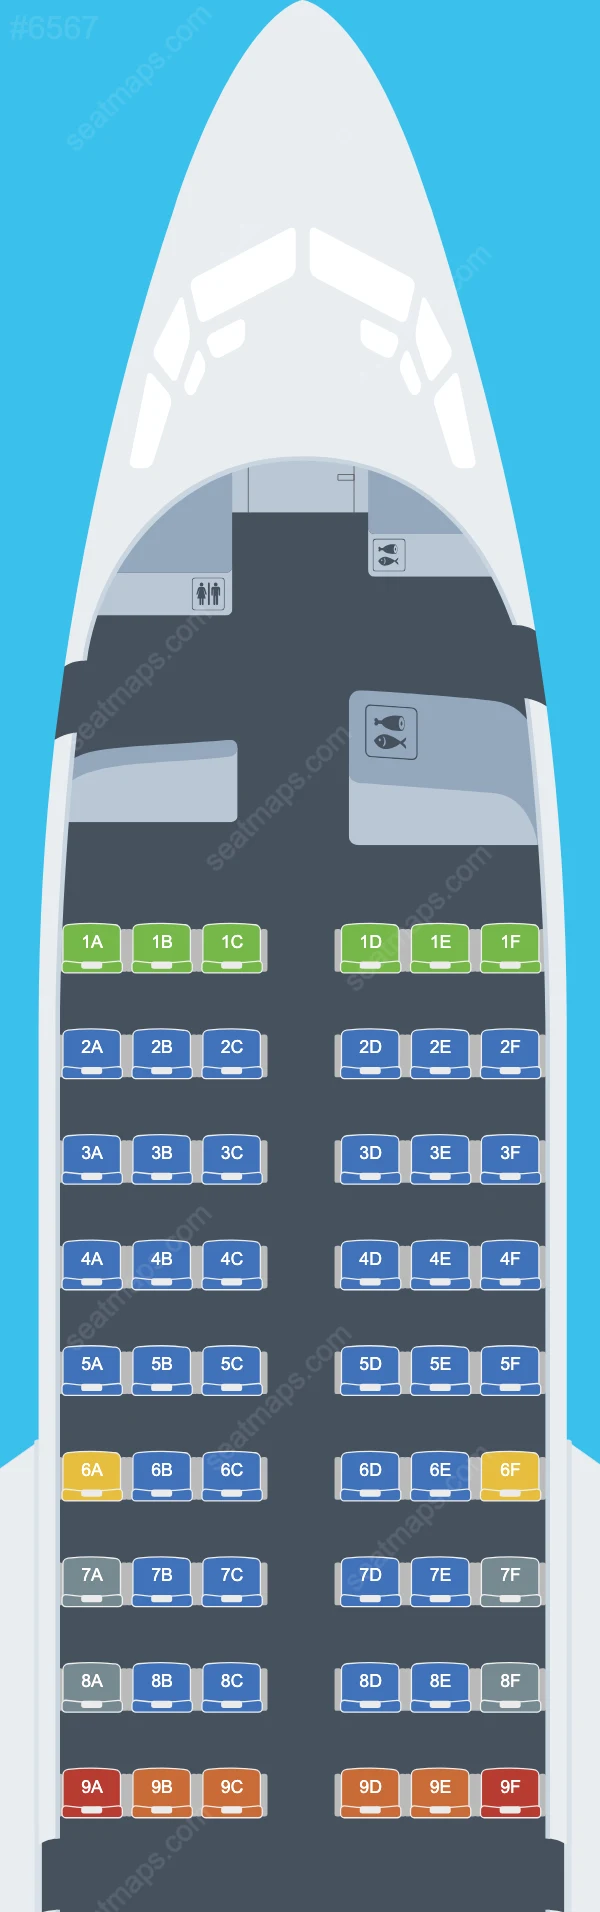 Blue Air Boeing 737 Seat Maps 737-500 V.2